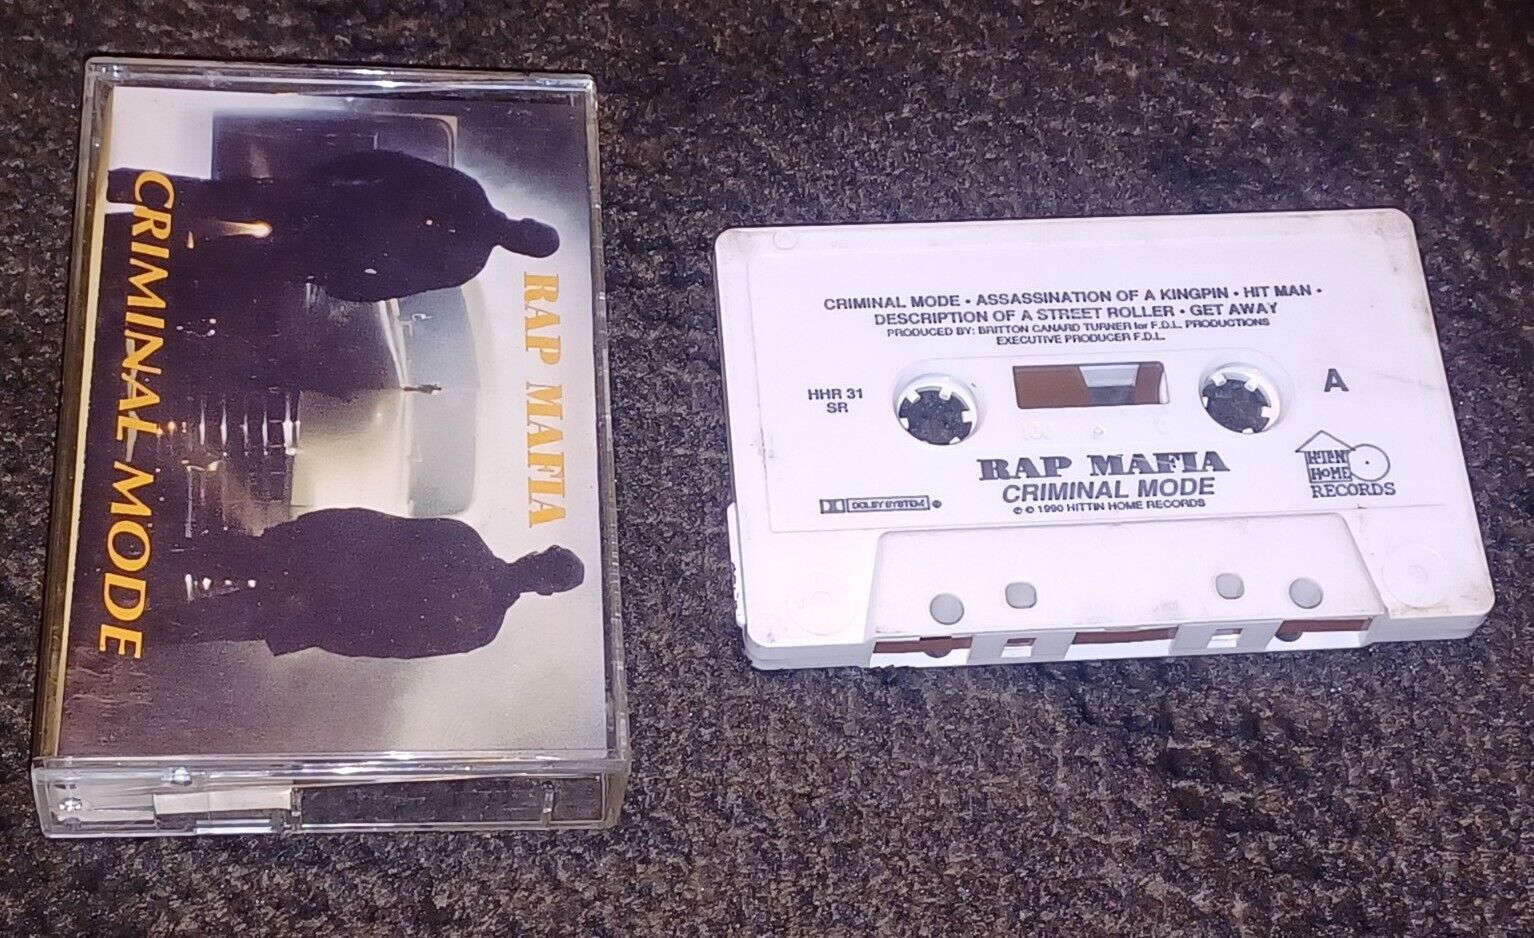 RAP MAFIA CRIMINAL MODE cassette Tape 1990 Hittin Home Records ULTRA RARE ALBUM